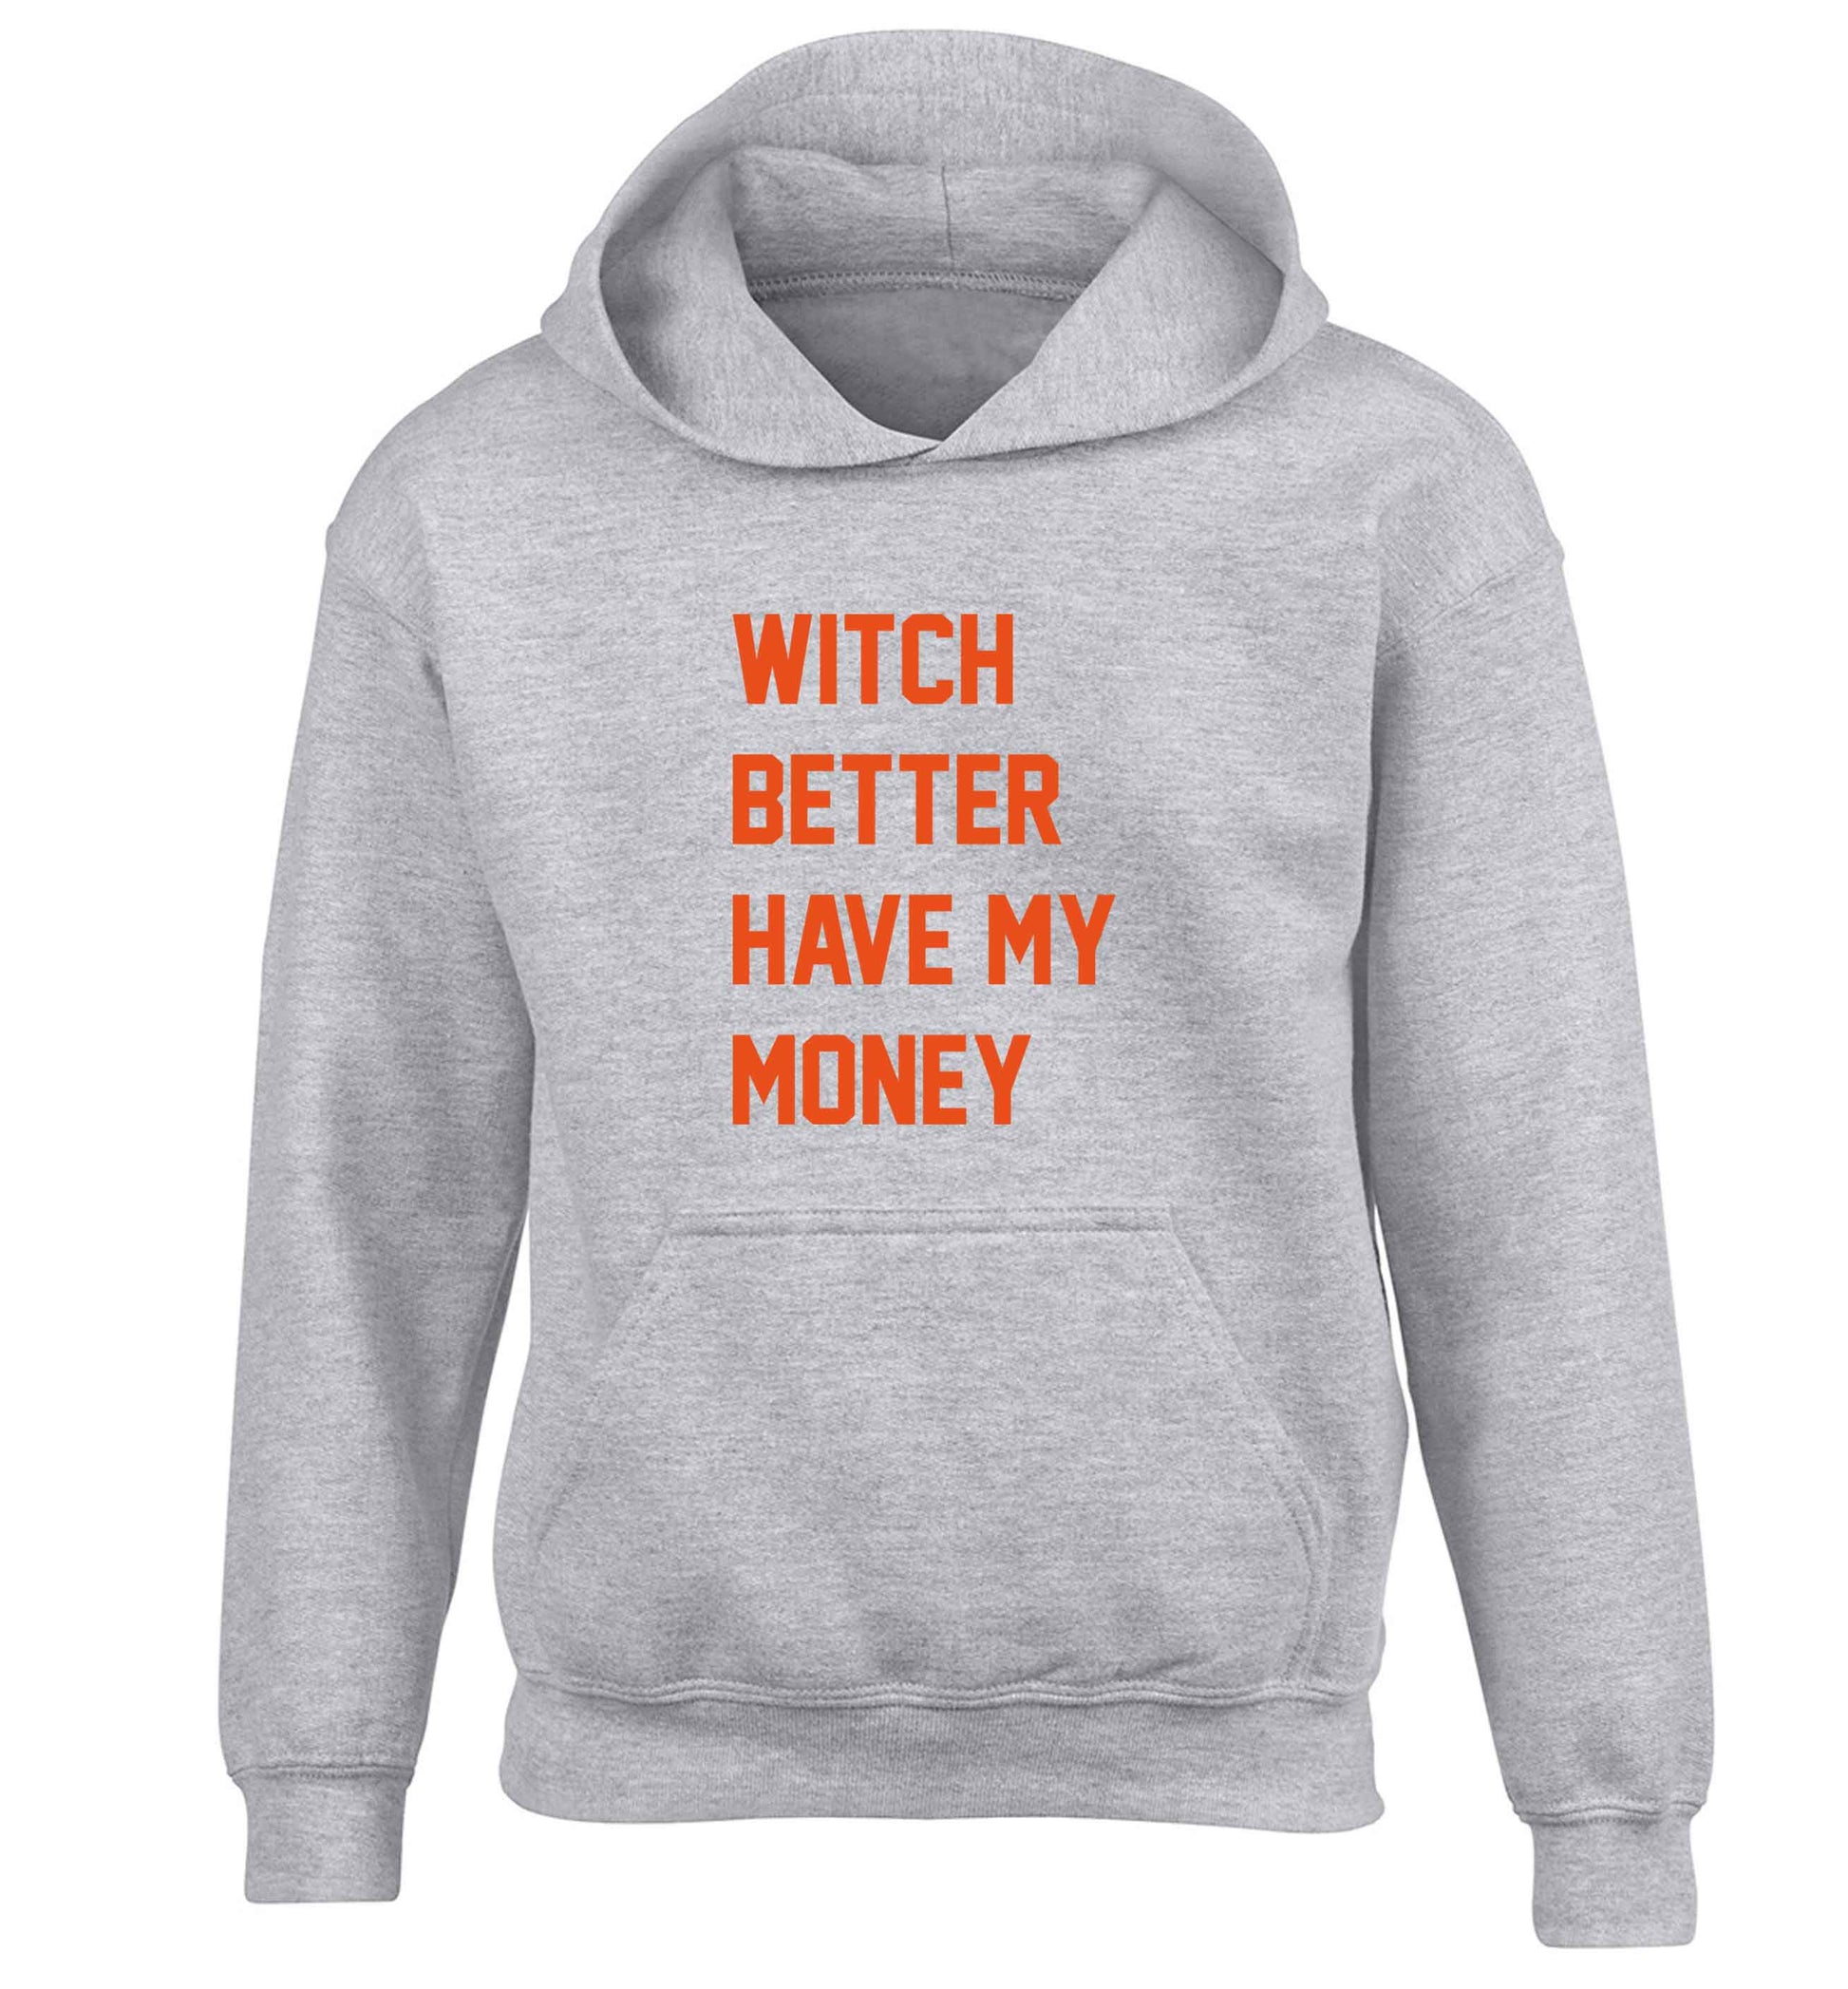 Witch better have my money children's grey hoodie 12-13 Years